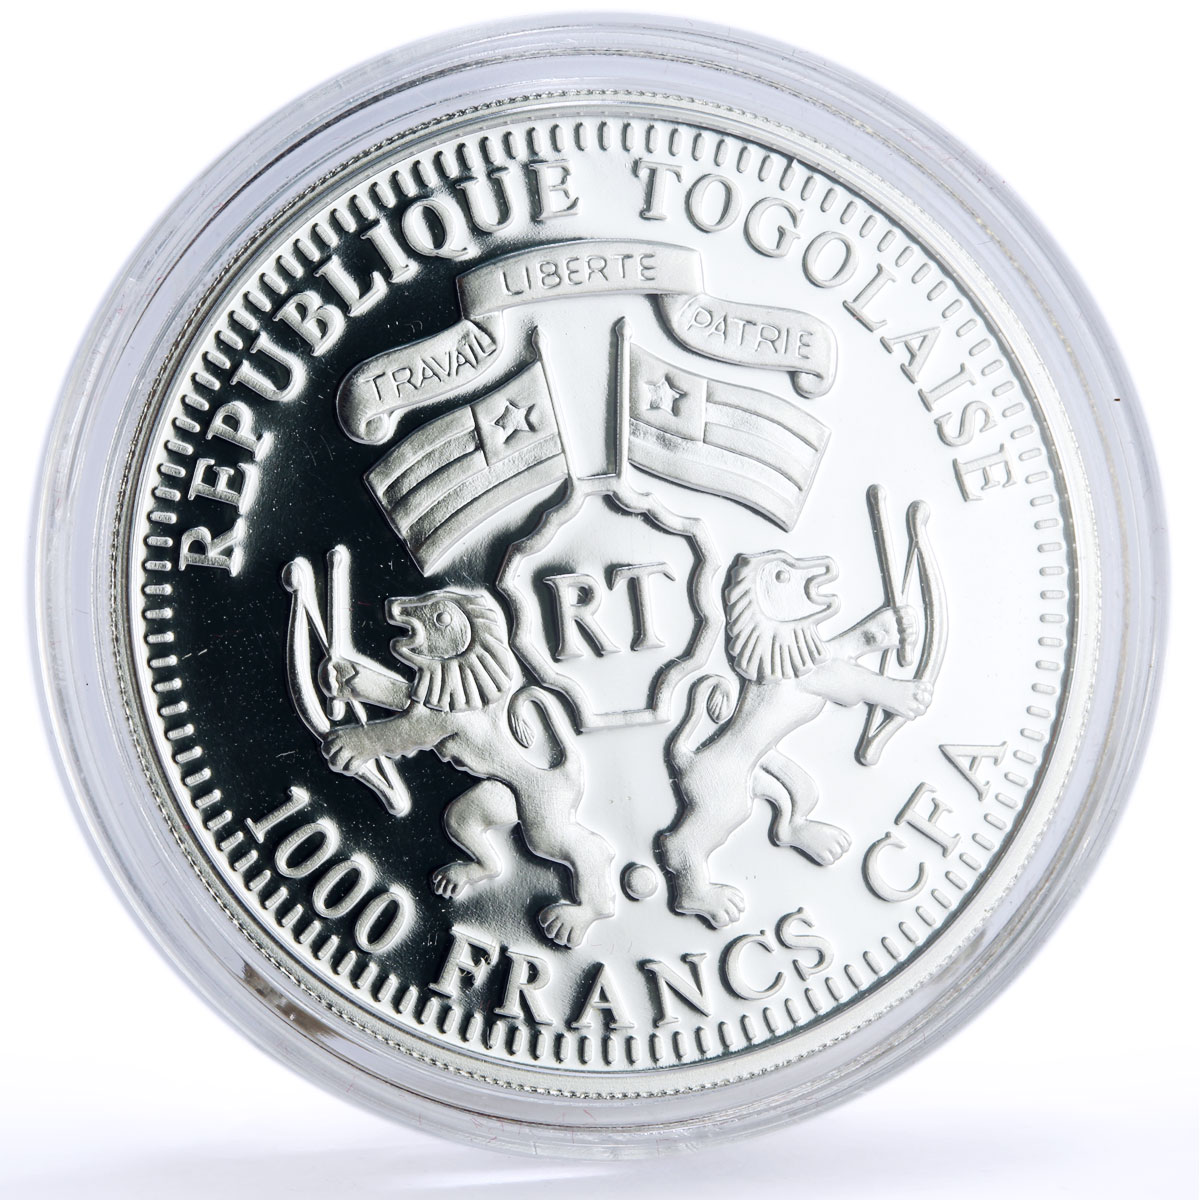 Togo 1000 francs Tropical Wildlife Orange Sunbird Fauna colored silver coin 2010